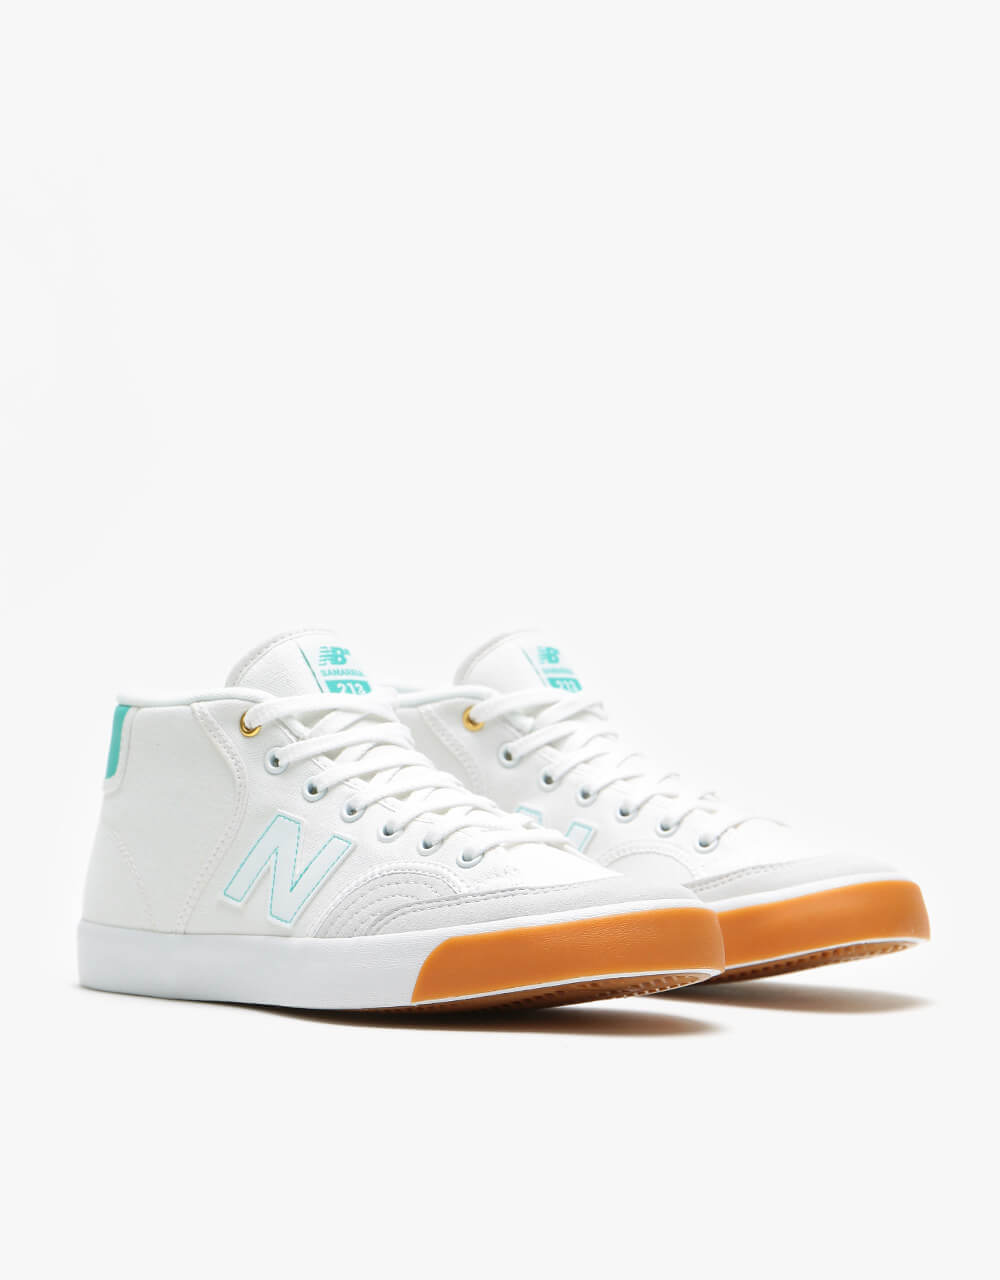 New Balance Numeric 213 Skate Shoes - White